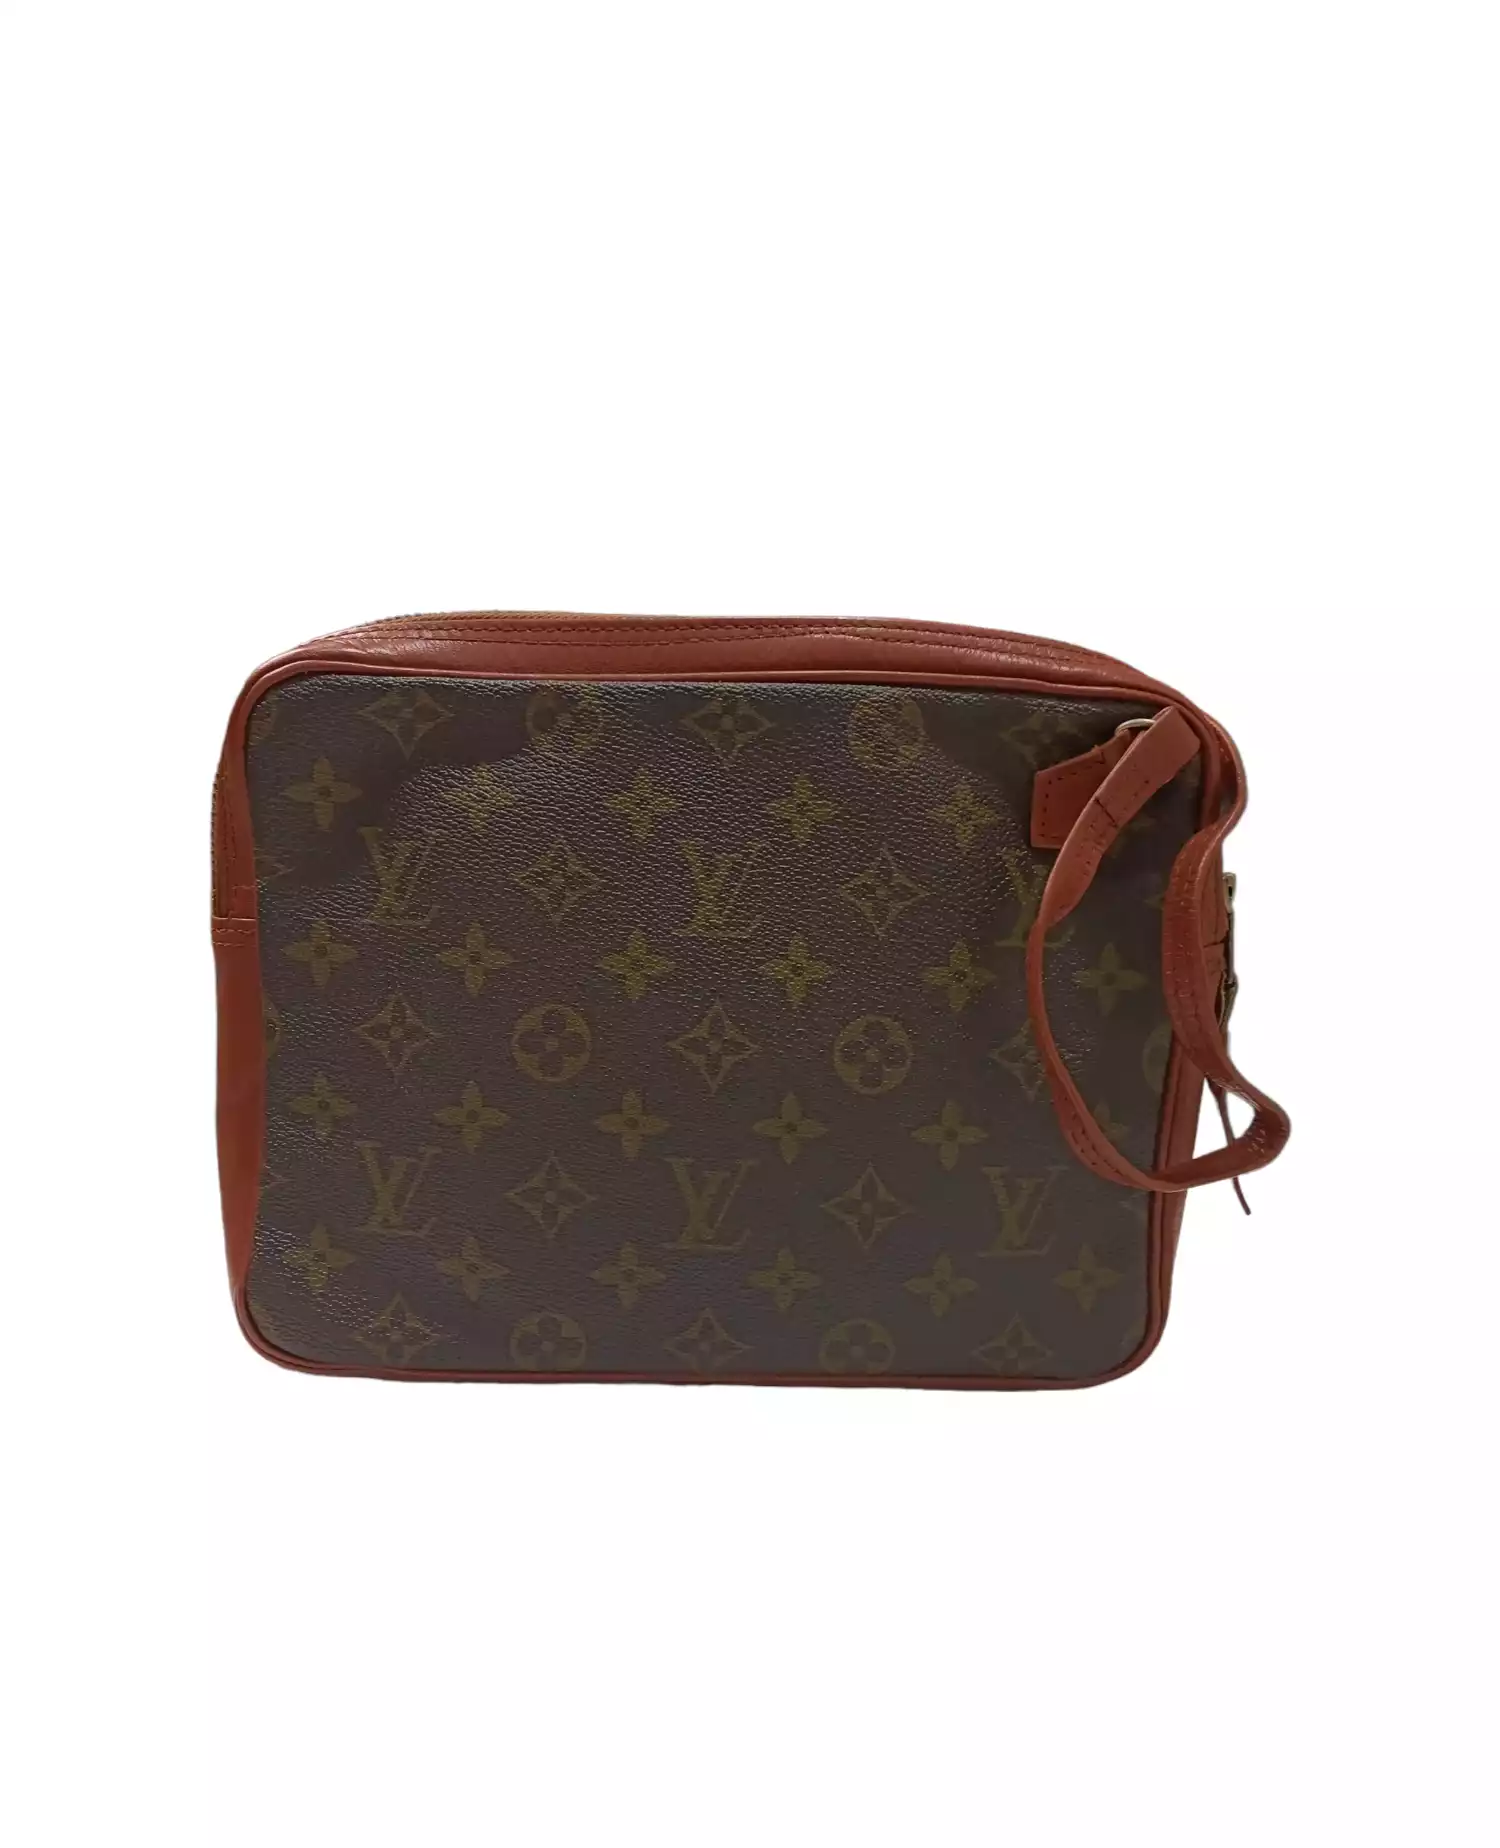 Clutch Bag by Louis Vuitton